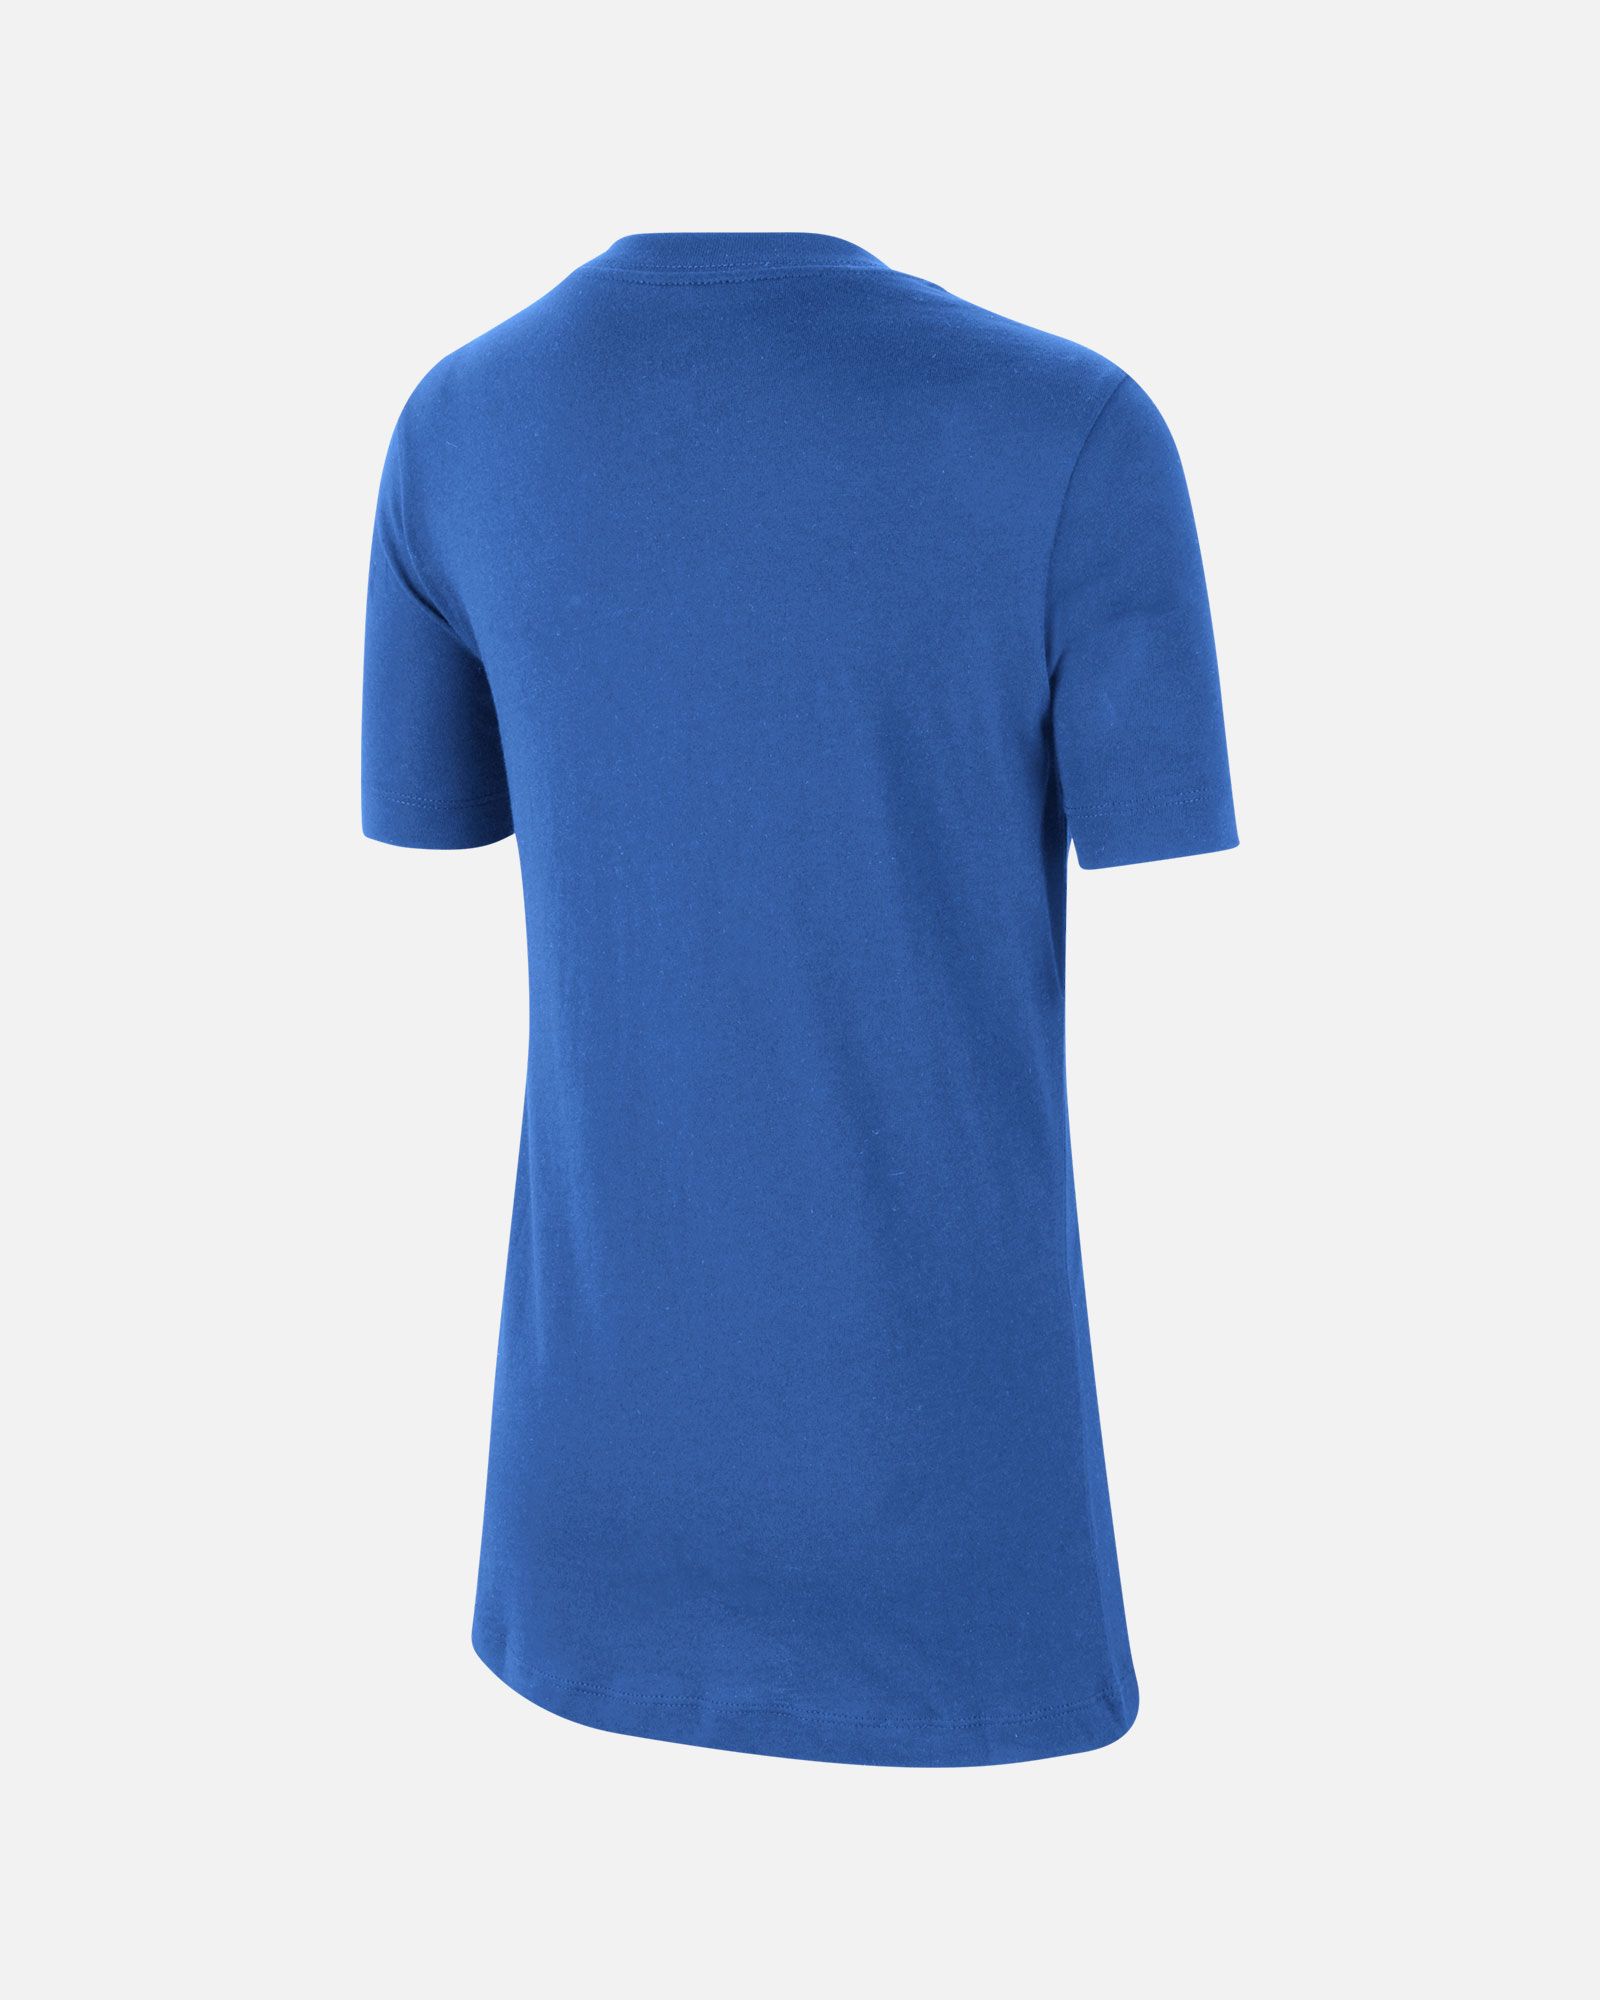 Camiseta Nike Air - Fútbol Factory